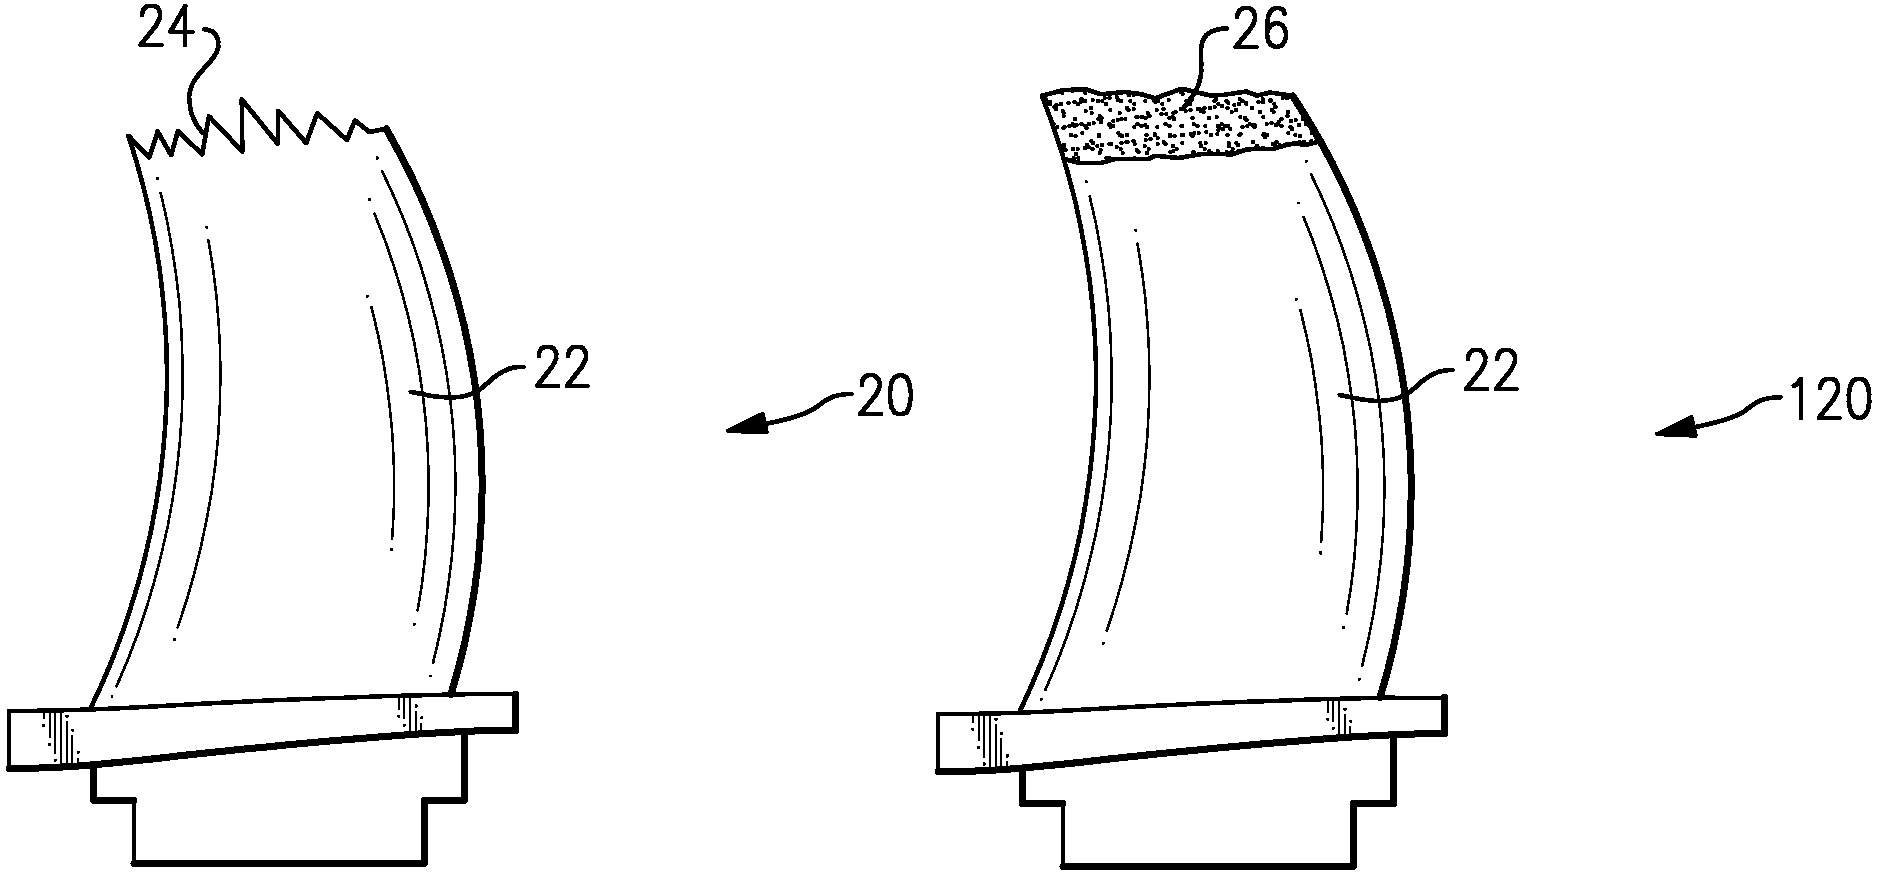 Method for restoring airfoil tip contour